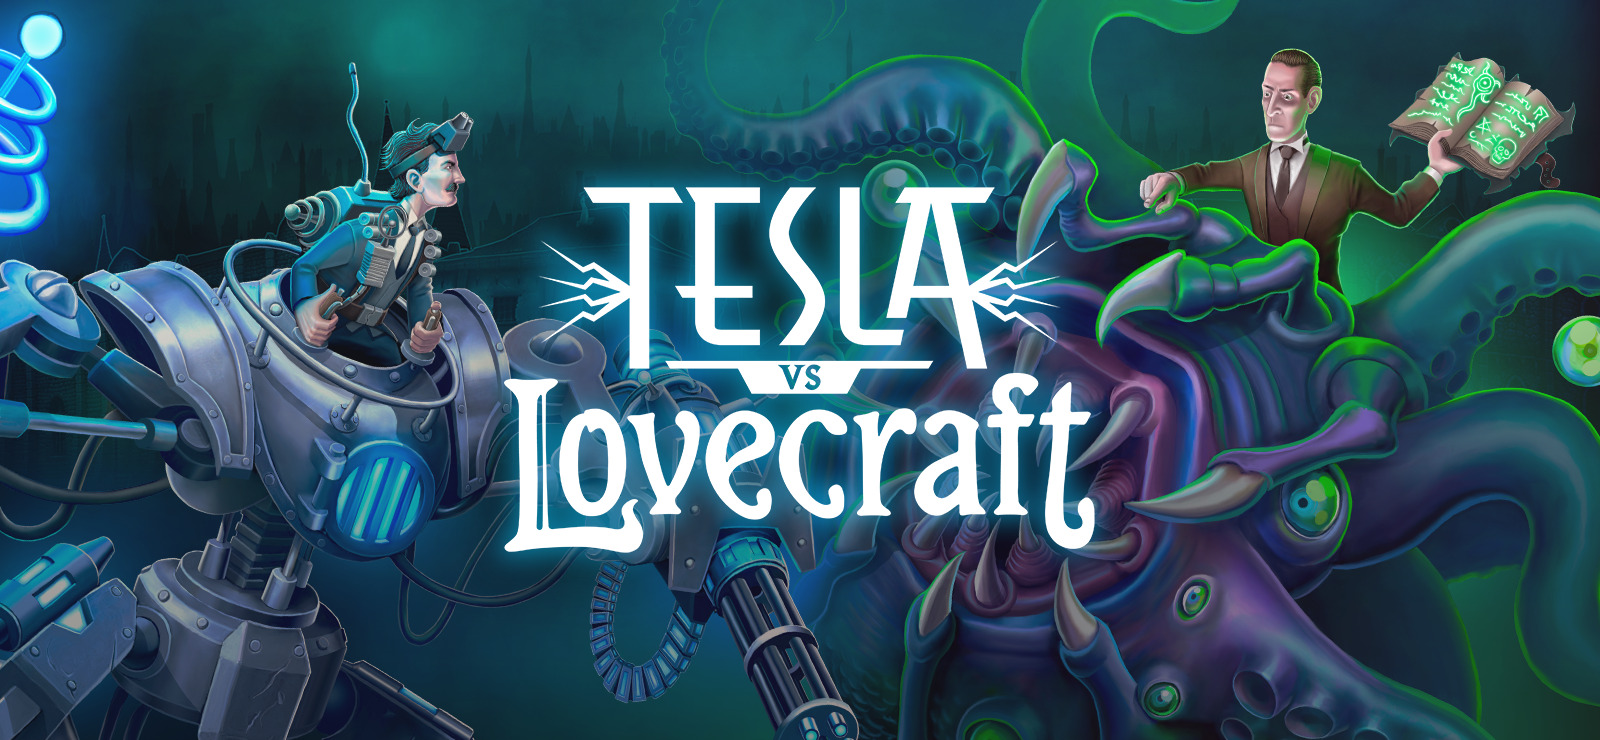 tesla vs lovecraft skydrow